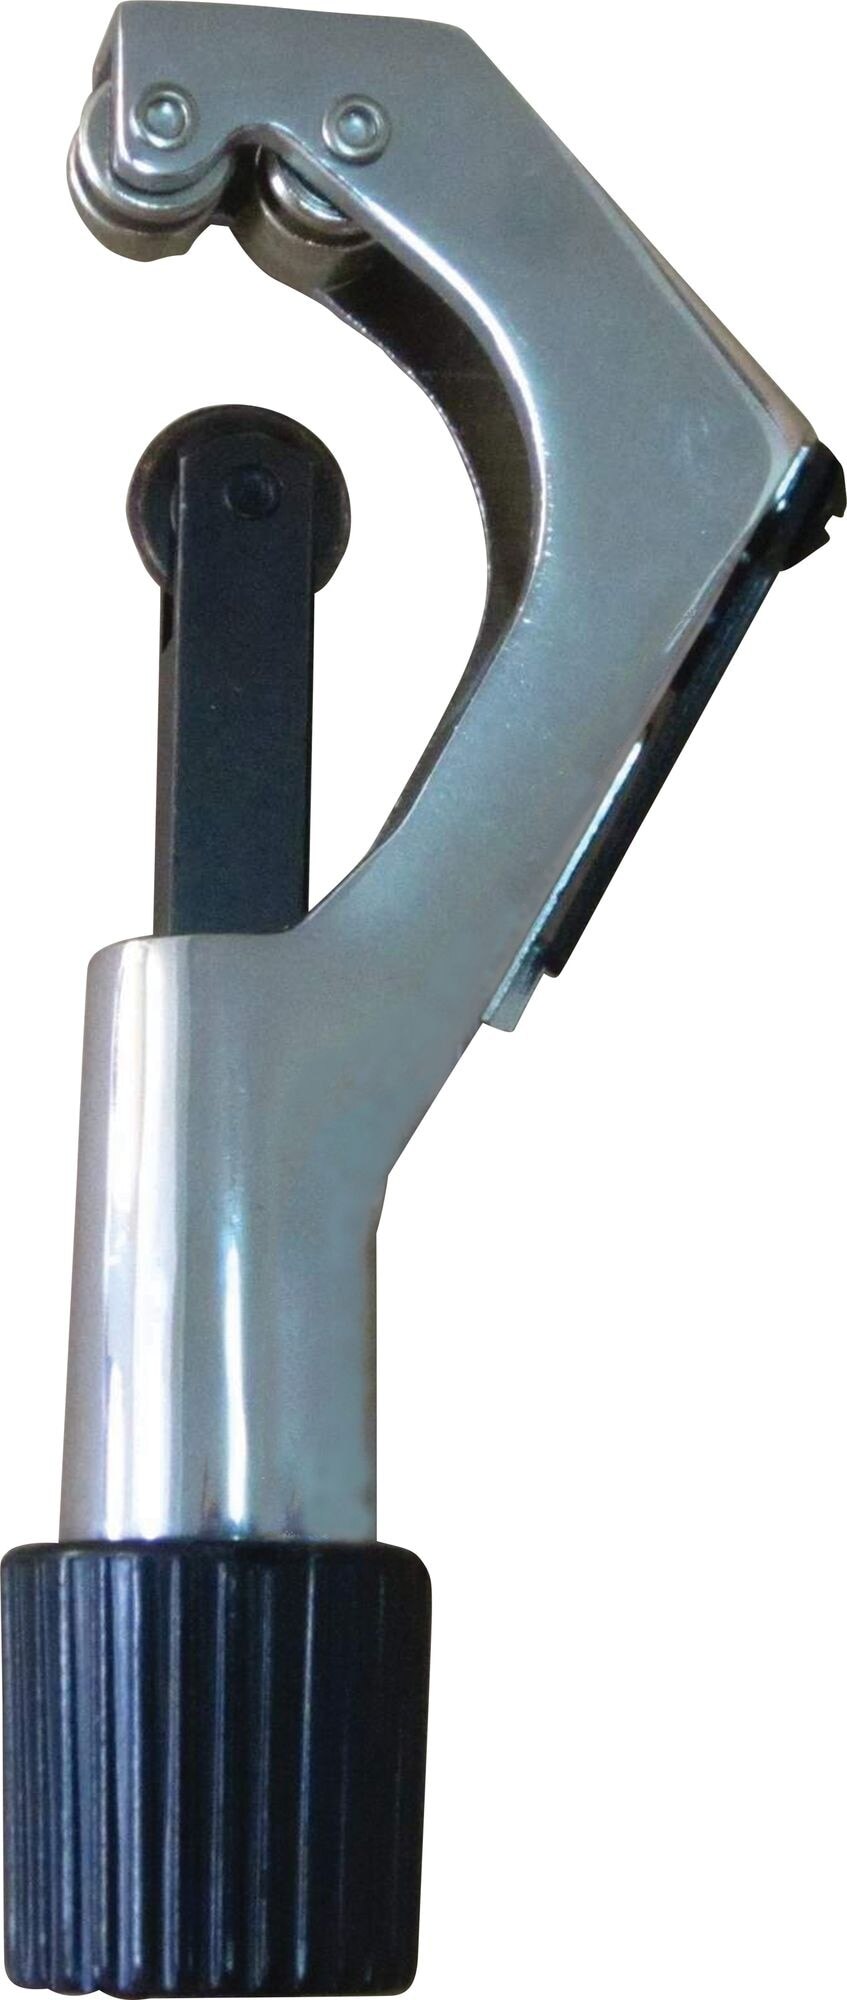 Westward Adjustable Pipe Cutter #1MUE6 